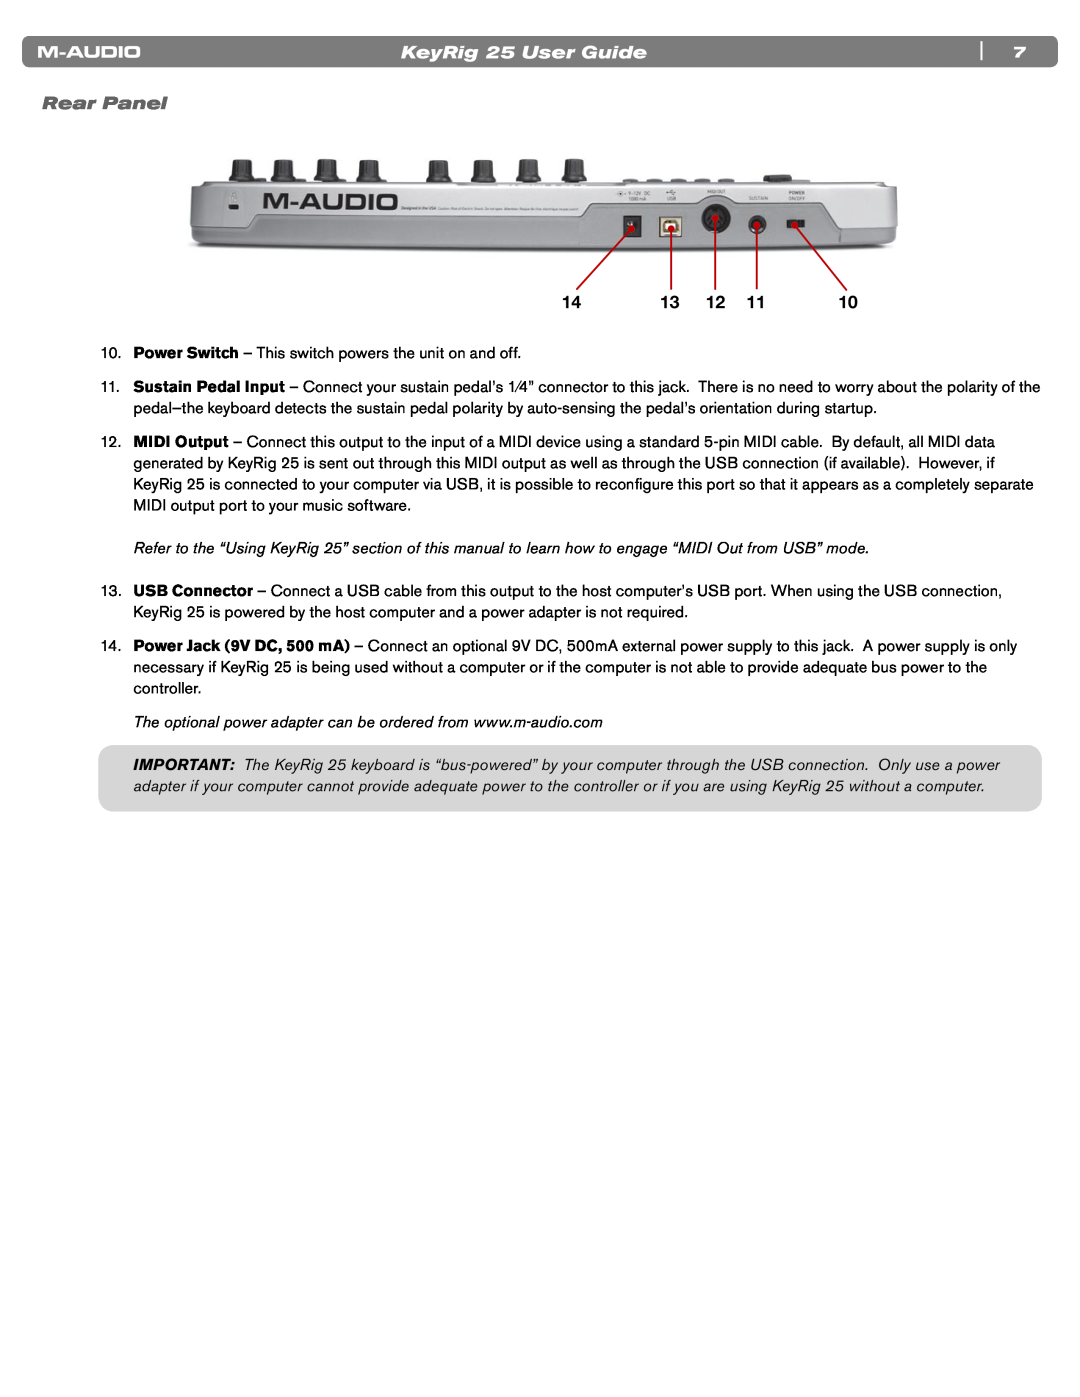 M-Audio manual Rear Panel, KeyRig 25 User Guide 